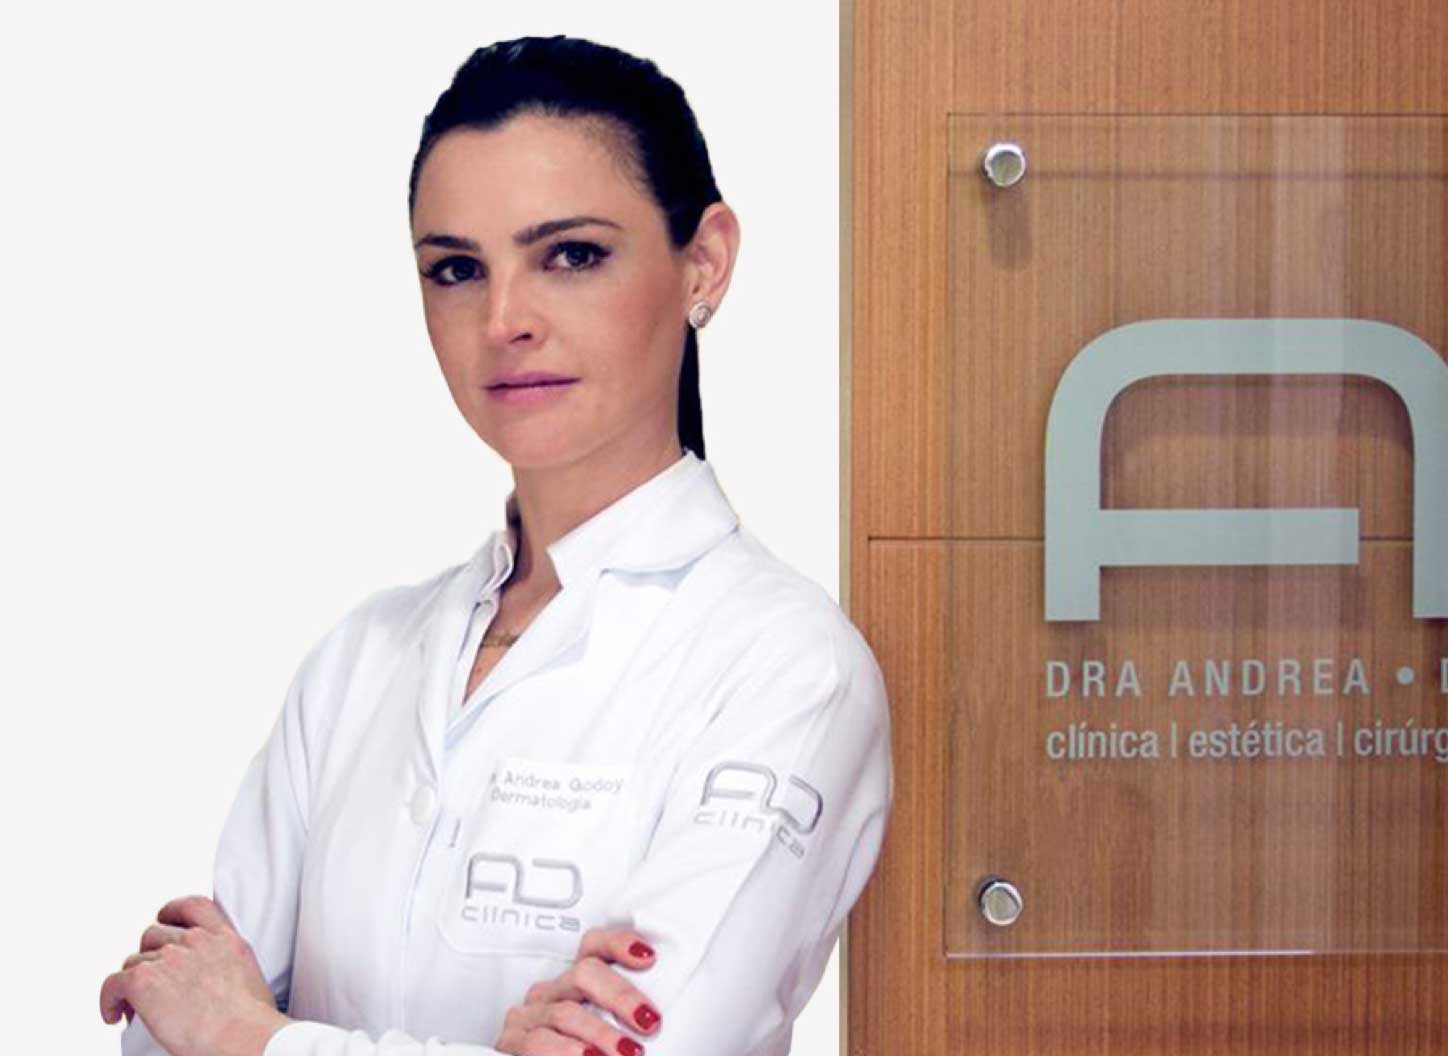 Meet Doctor Andrea Godoy - A Leading Dermatologist From Brazil